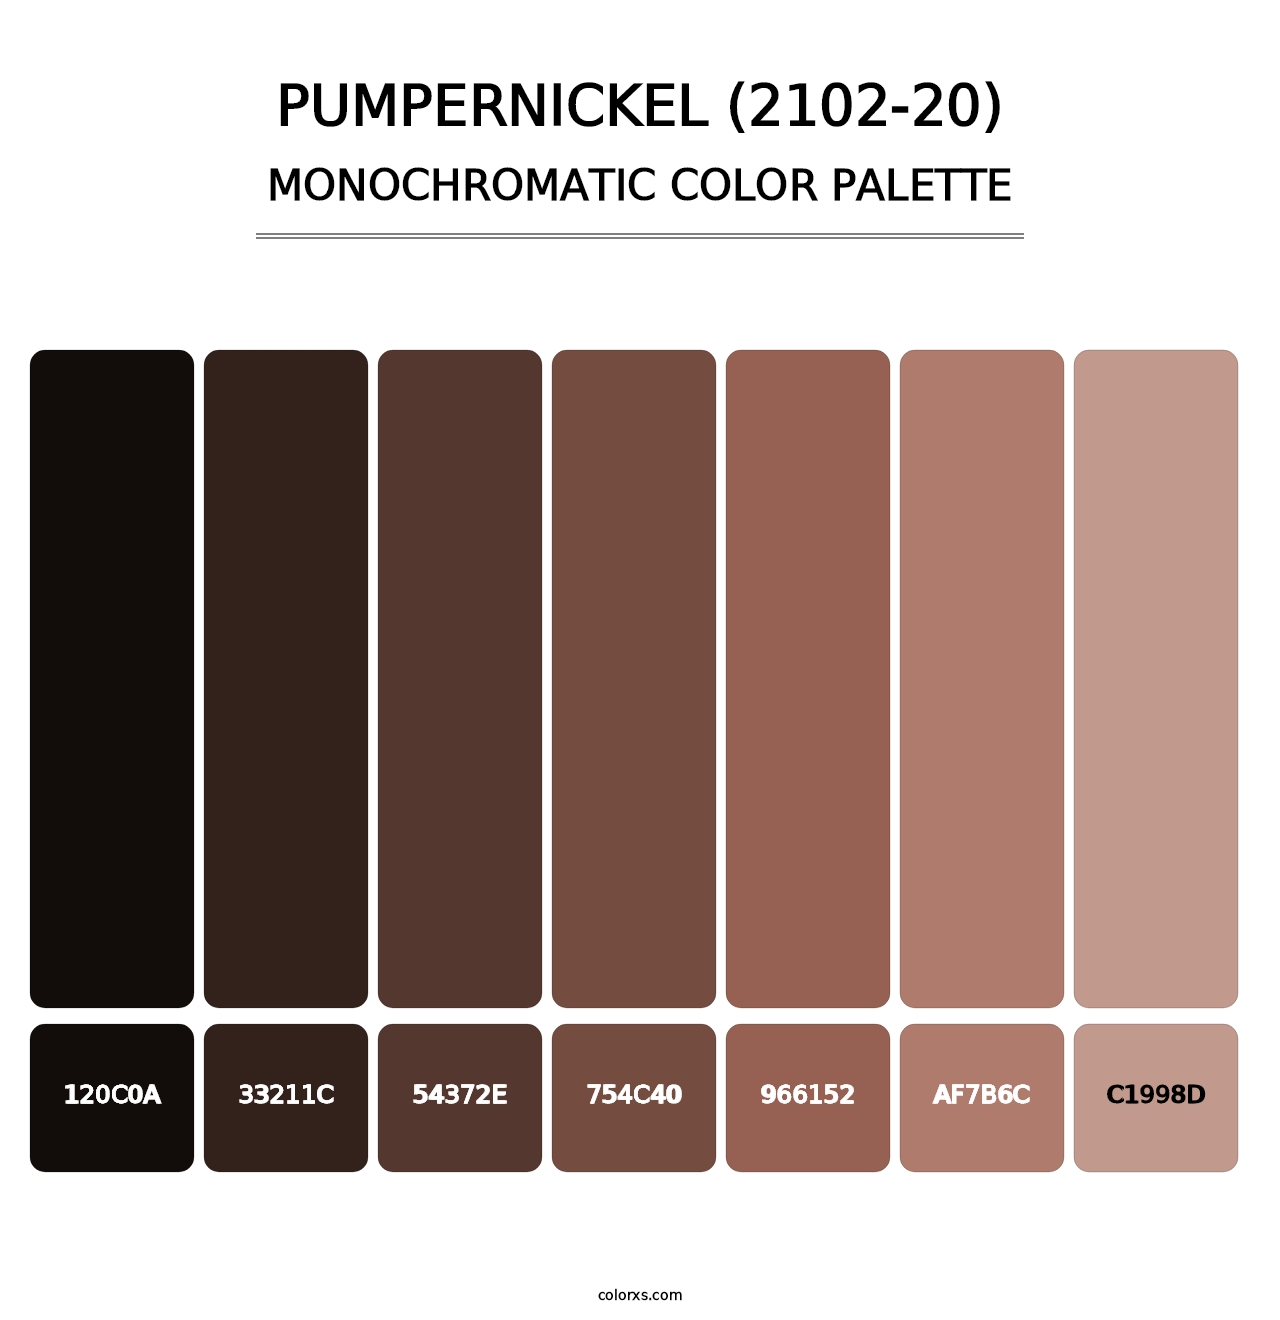 Pumpernickel (2102-20) - Monochromatic Color Palette